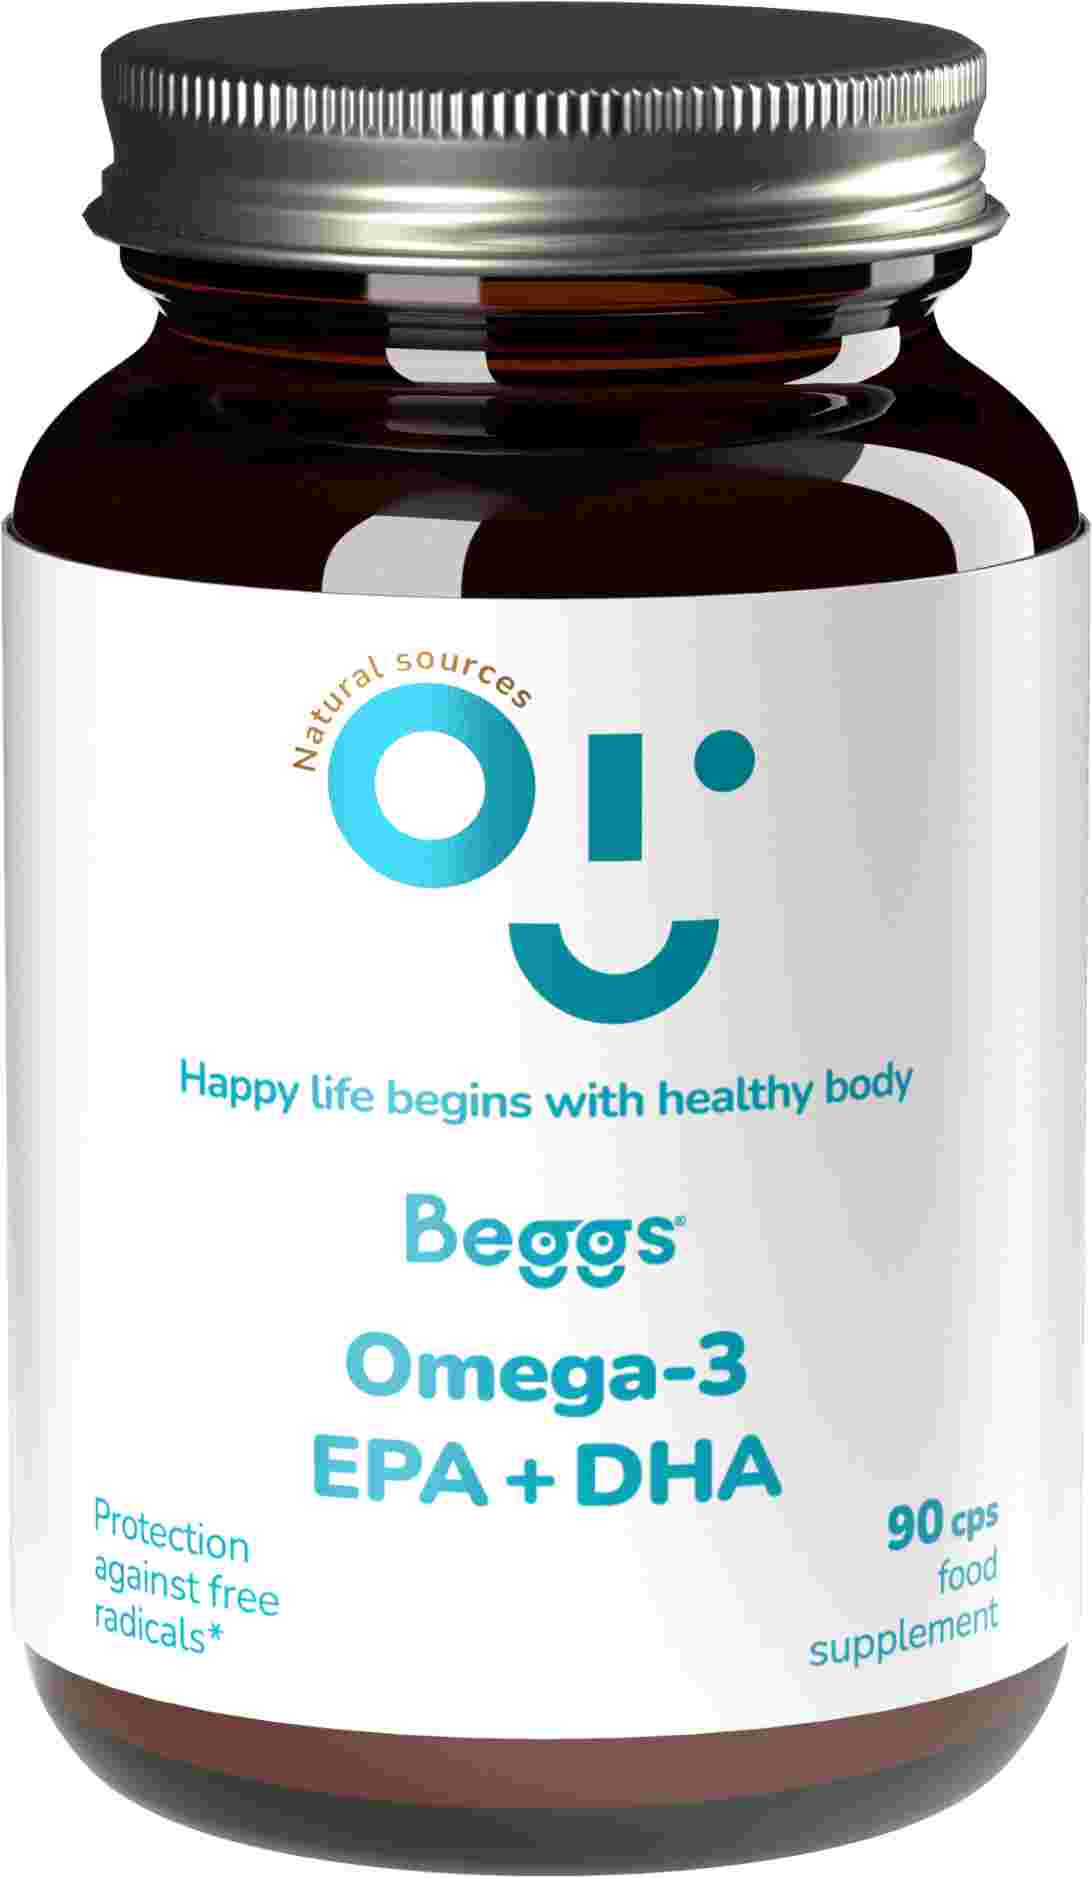 Beggs Omega-3, EPADHA 90 cps